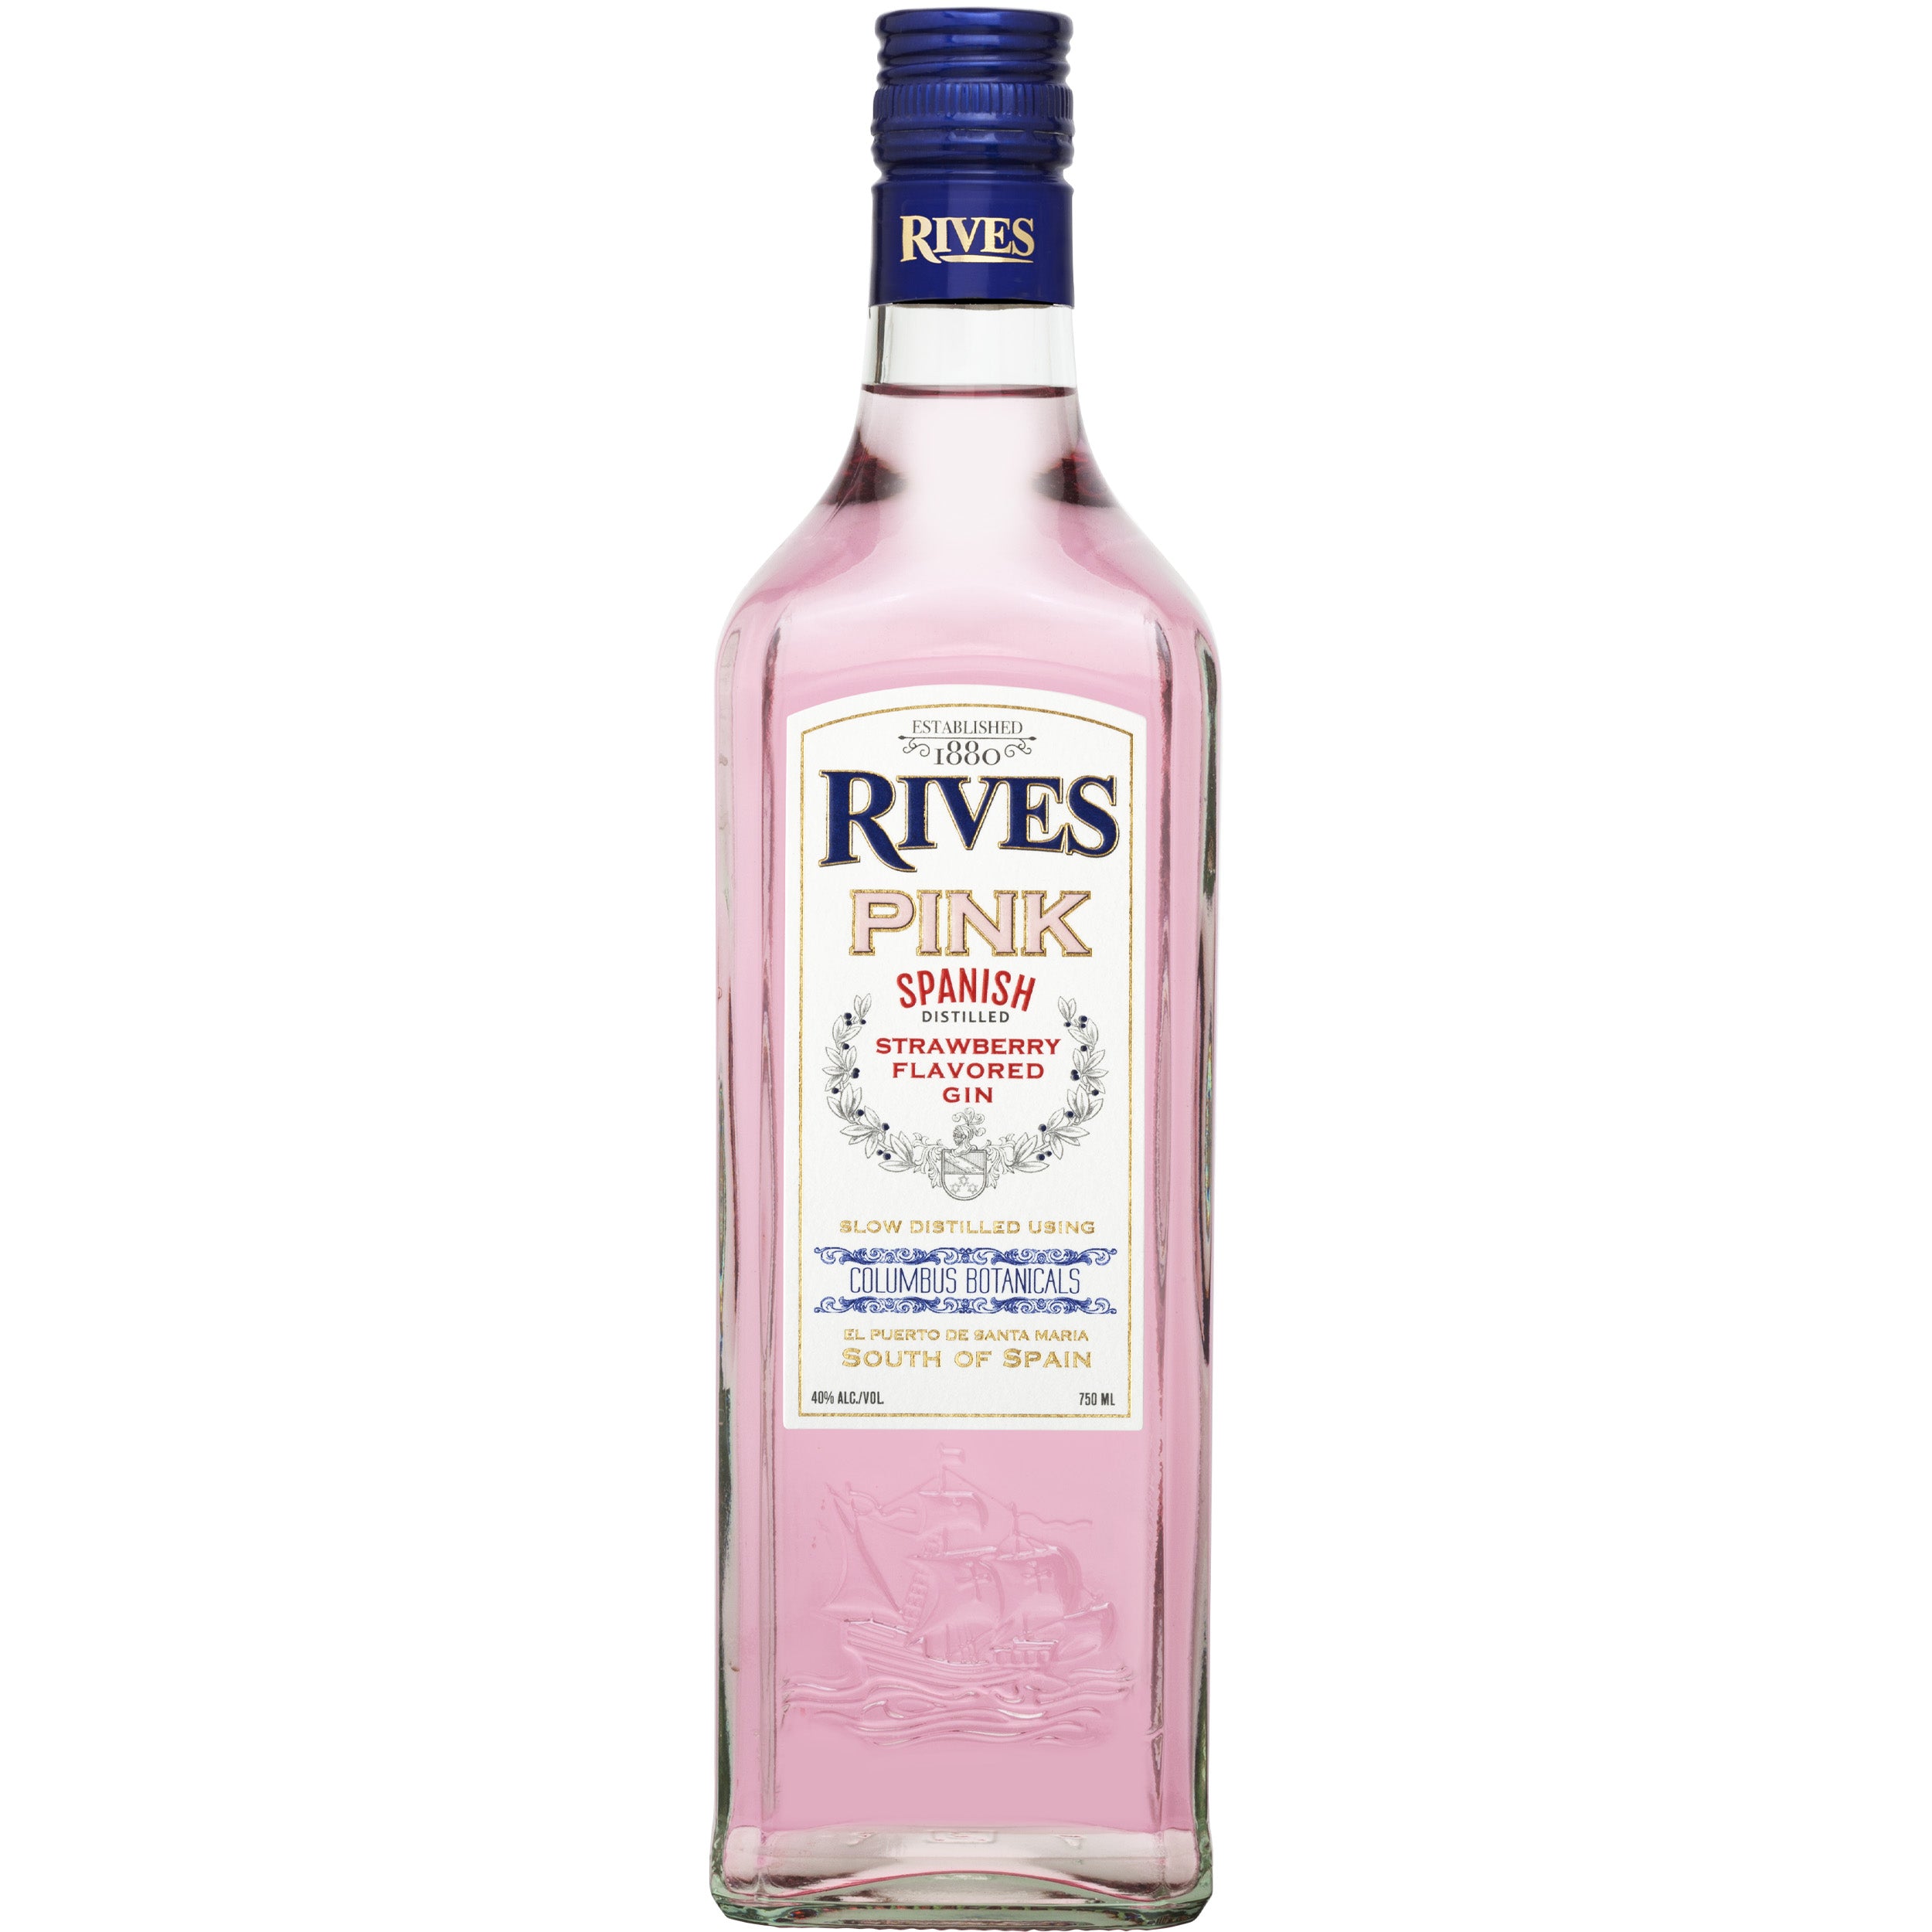 Pink Gin Rives Chips Liquor – Spanish